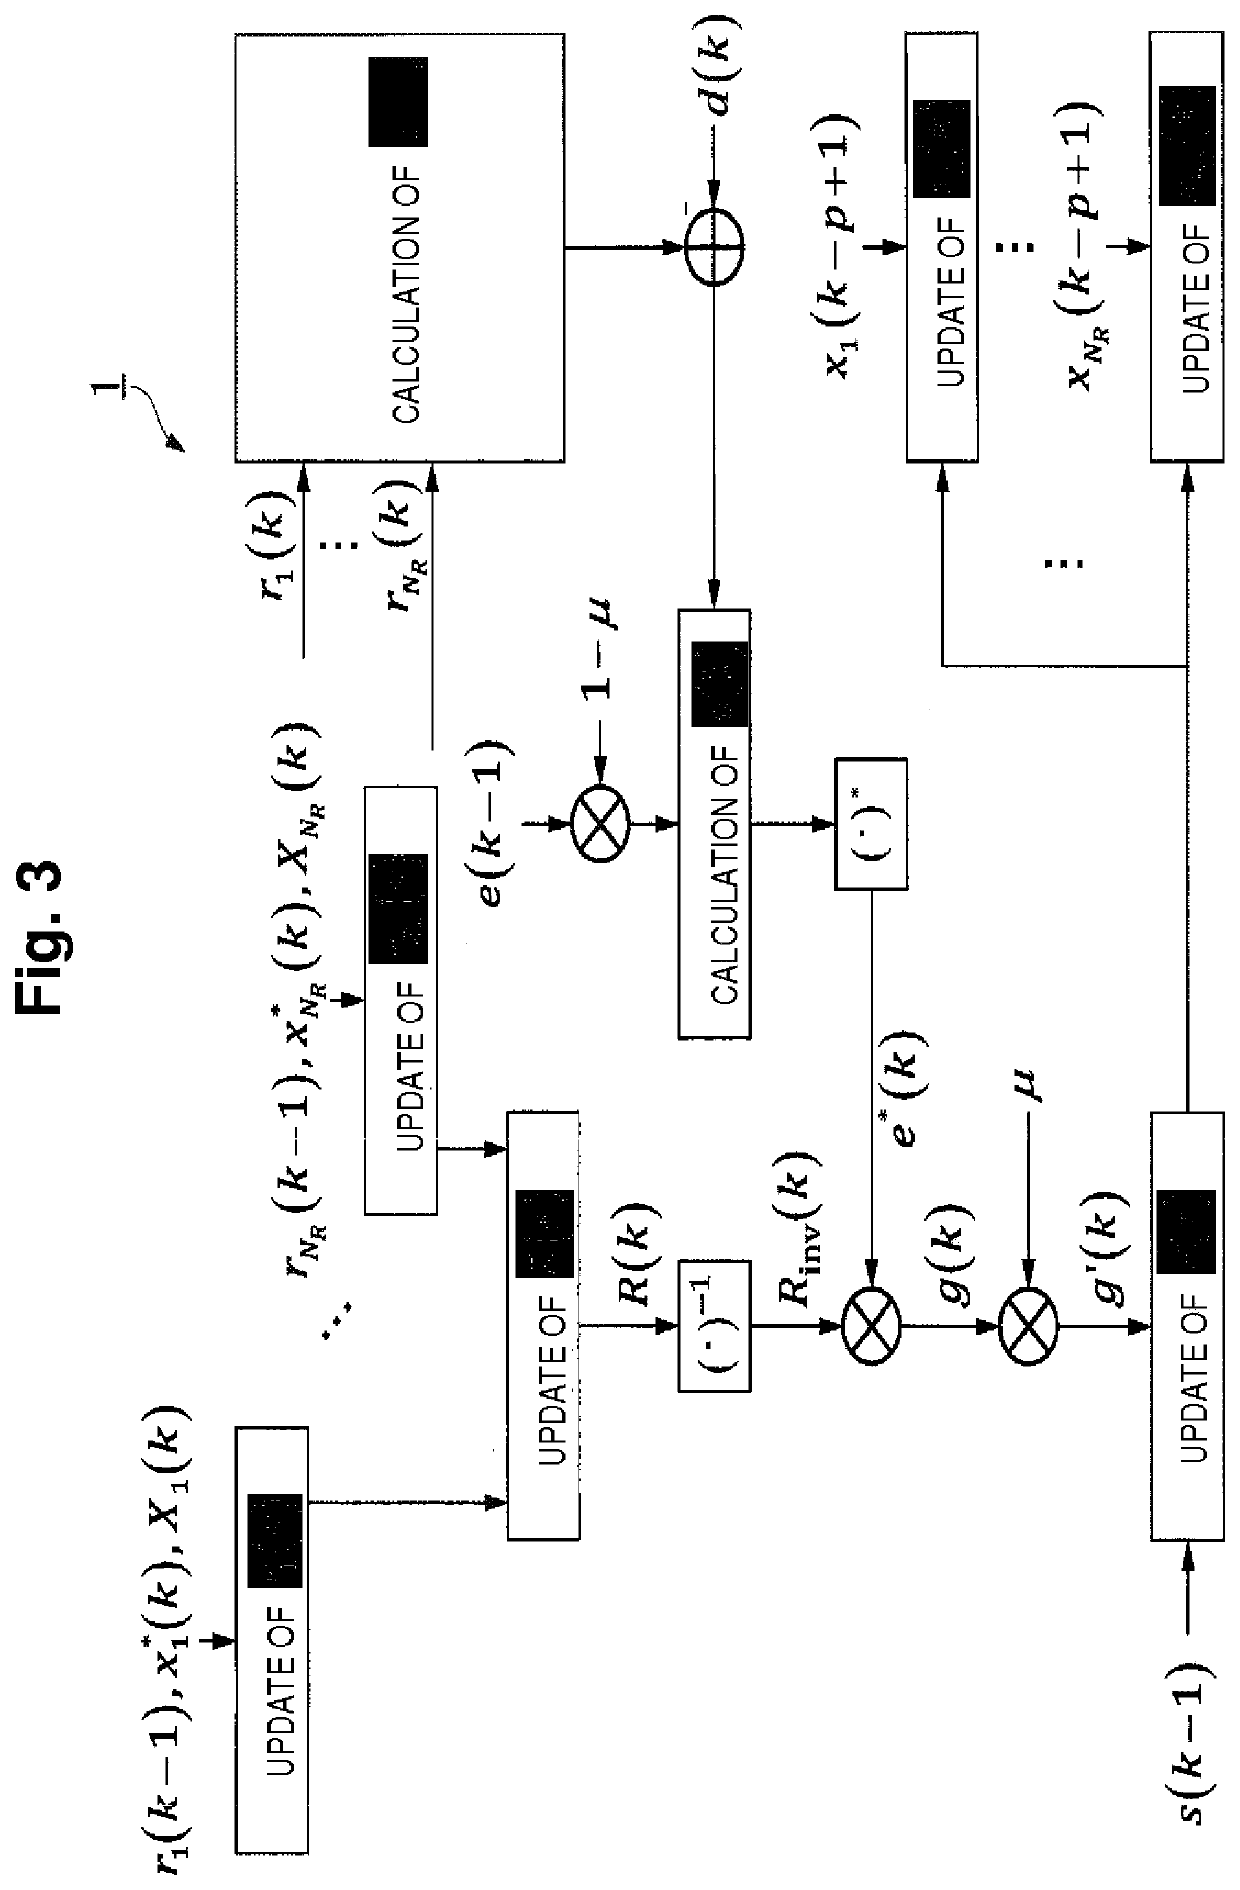 Optical signal processing apparatus, optical signal processing method and computer program